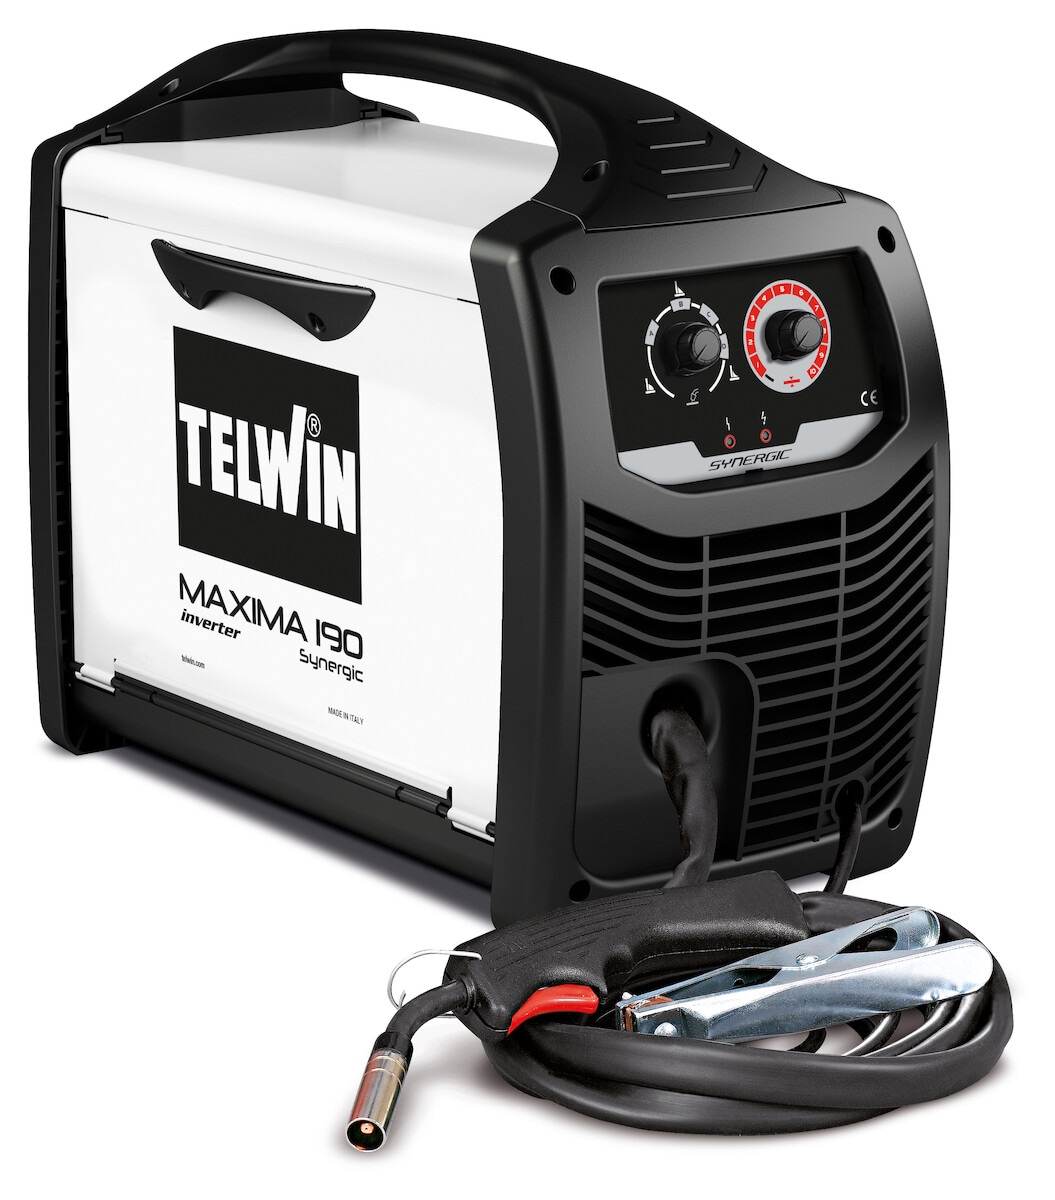 Telwin MAXIMA 190 Synergic sveiseapparat